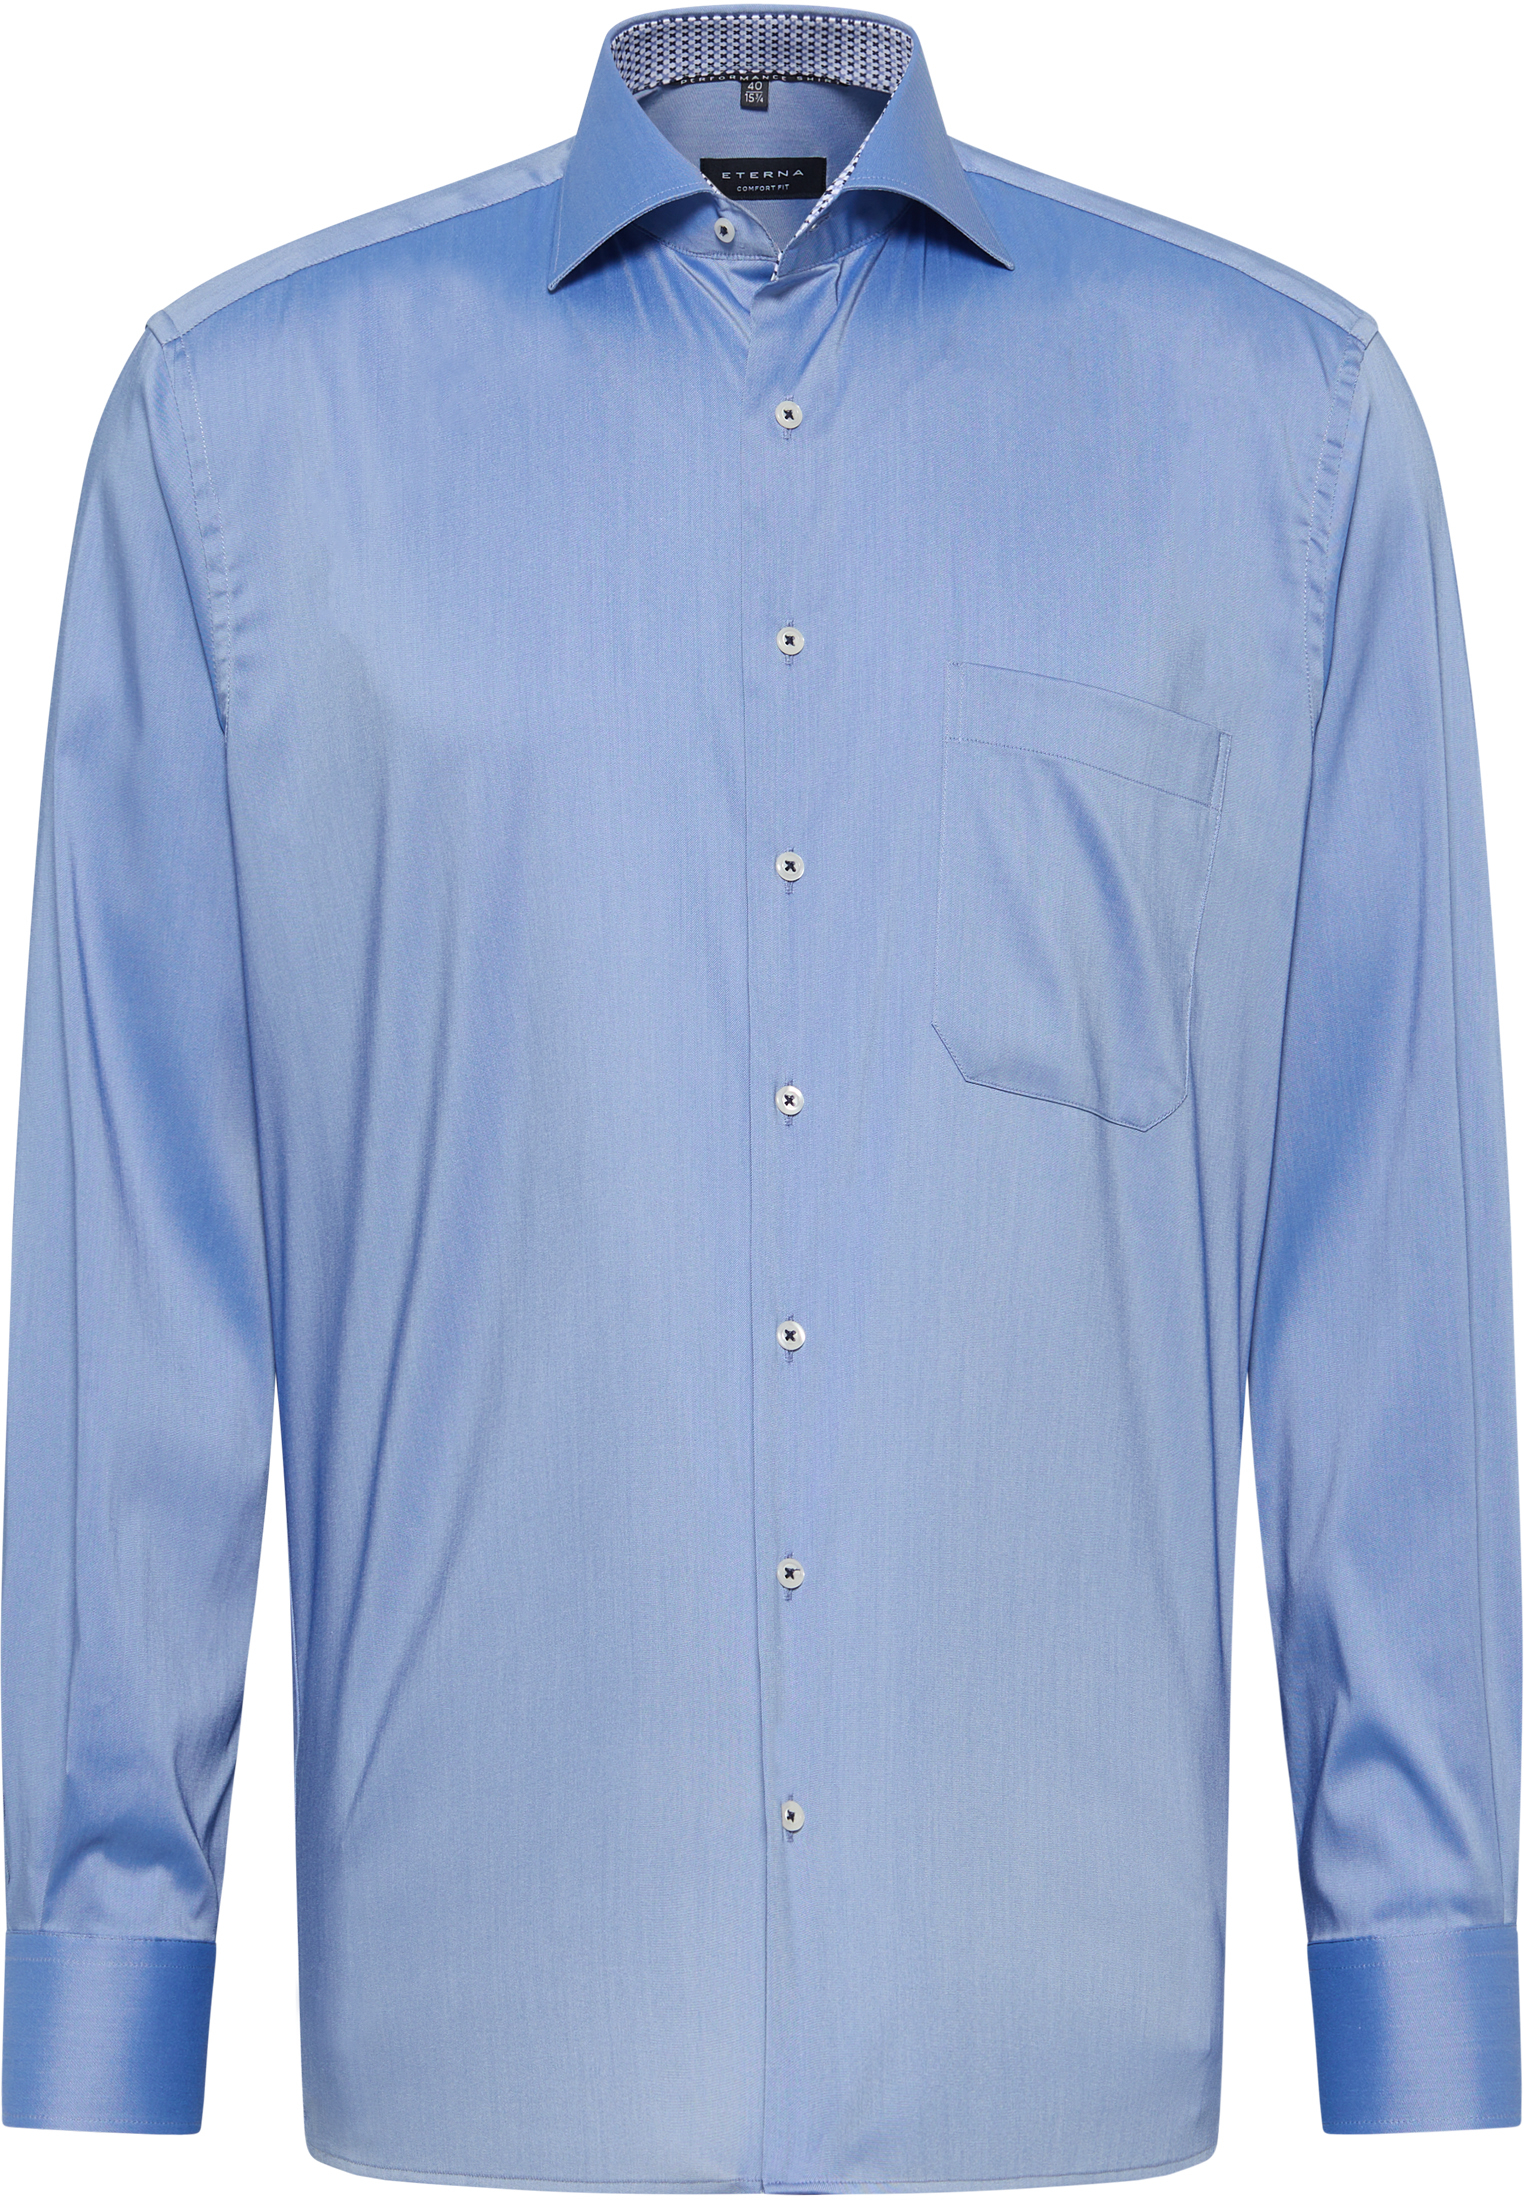 COMFORT FIT Performance Shirt in royal blue plain